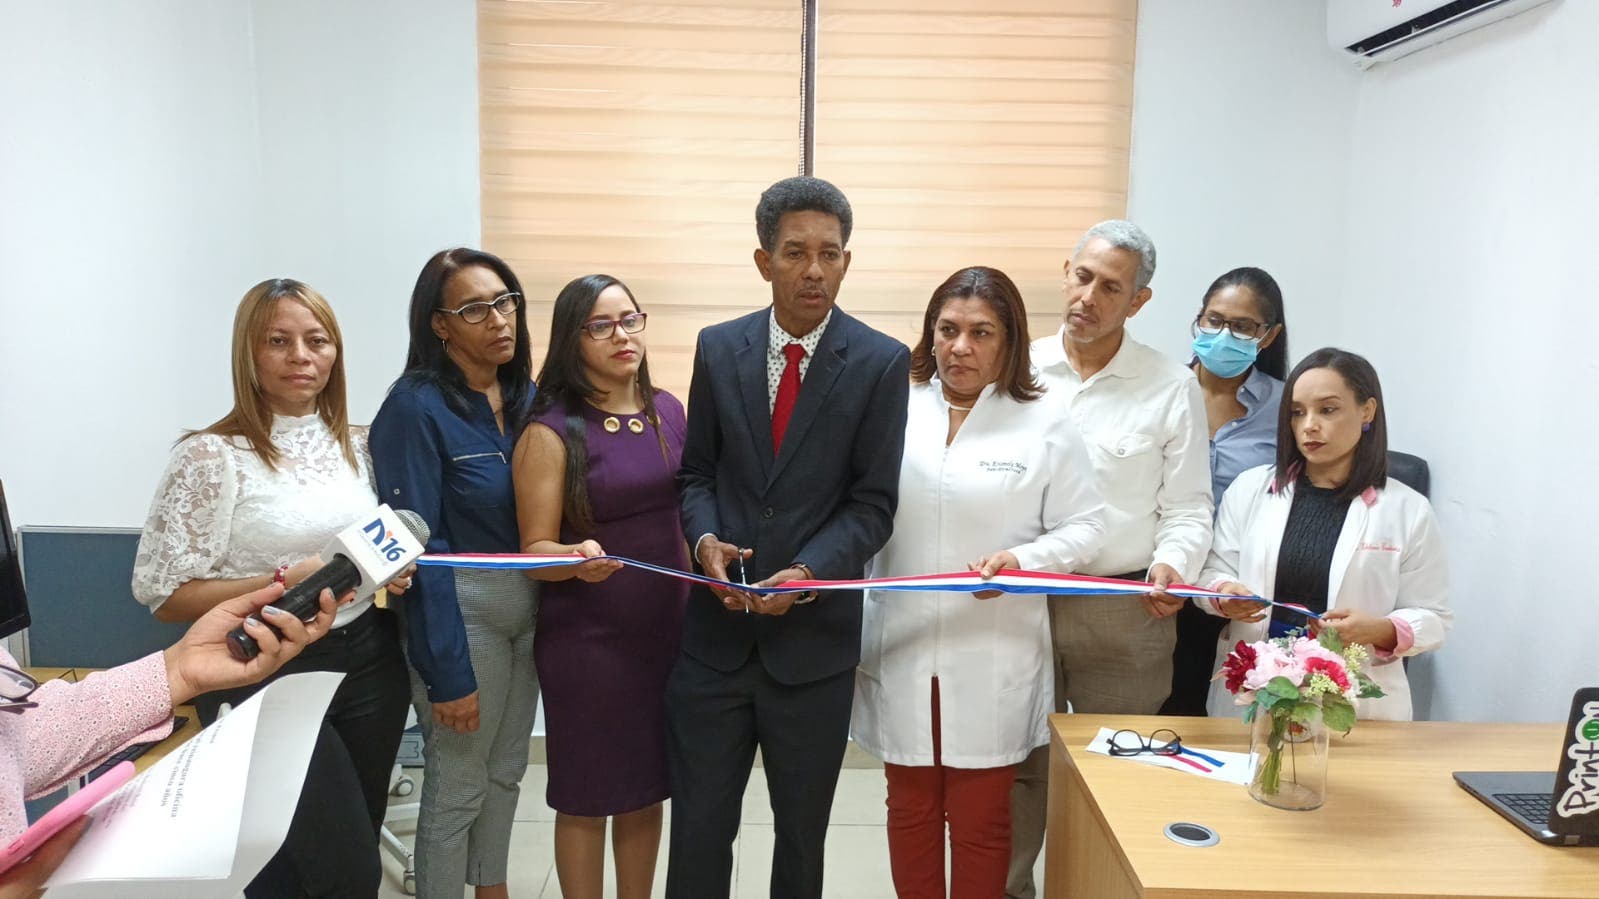 Hospital Robert Reid Cabral reinaugura oficina bloque quirúrgico